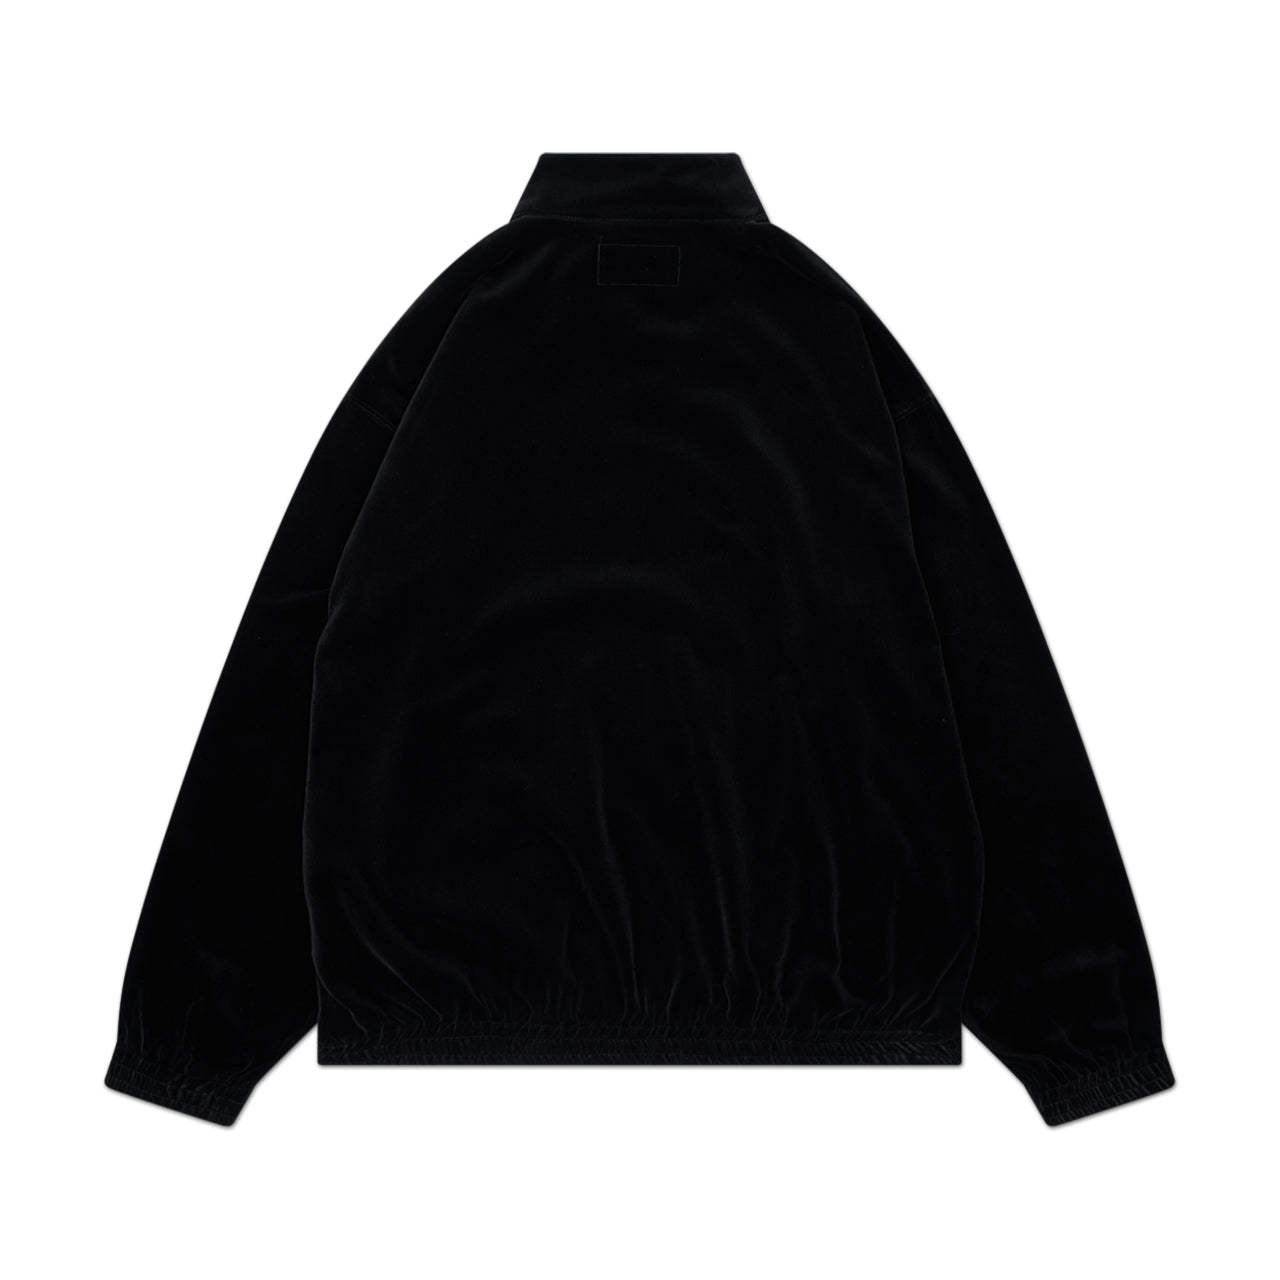 wacko maria velvet jacket (black) 22SS-WMO-SS01 - a.plus